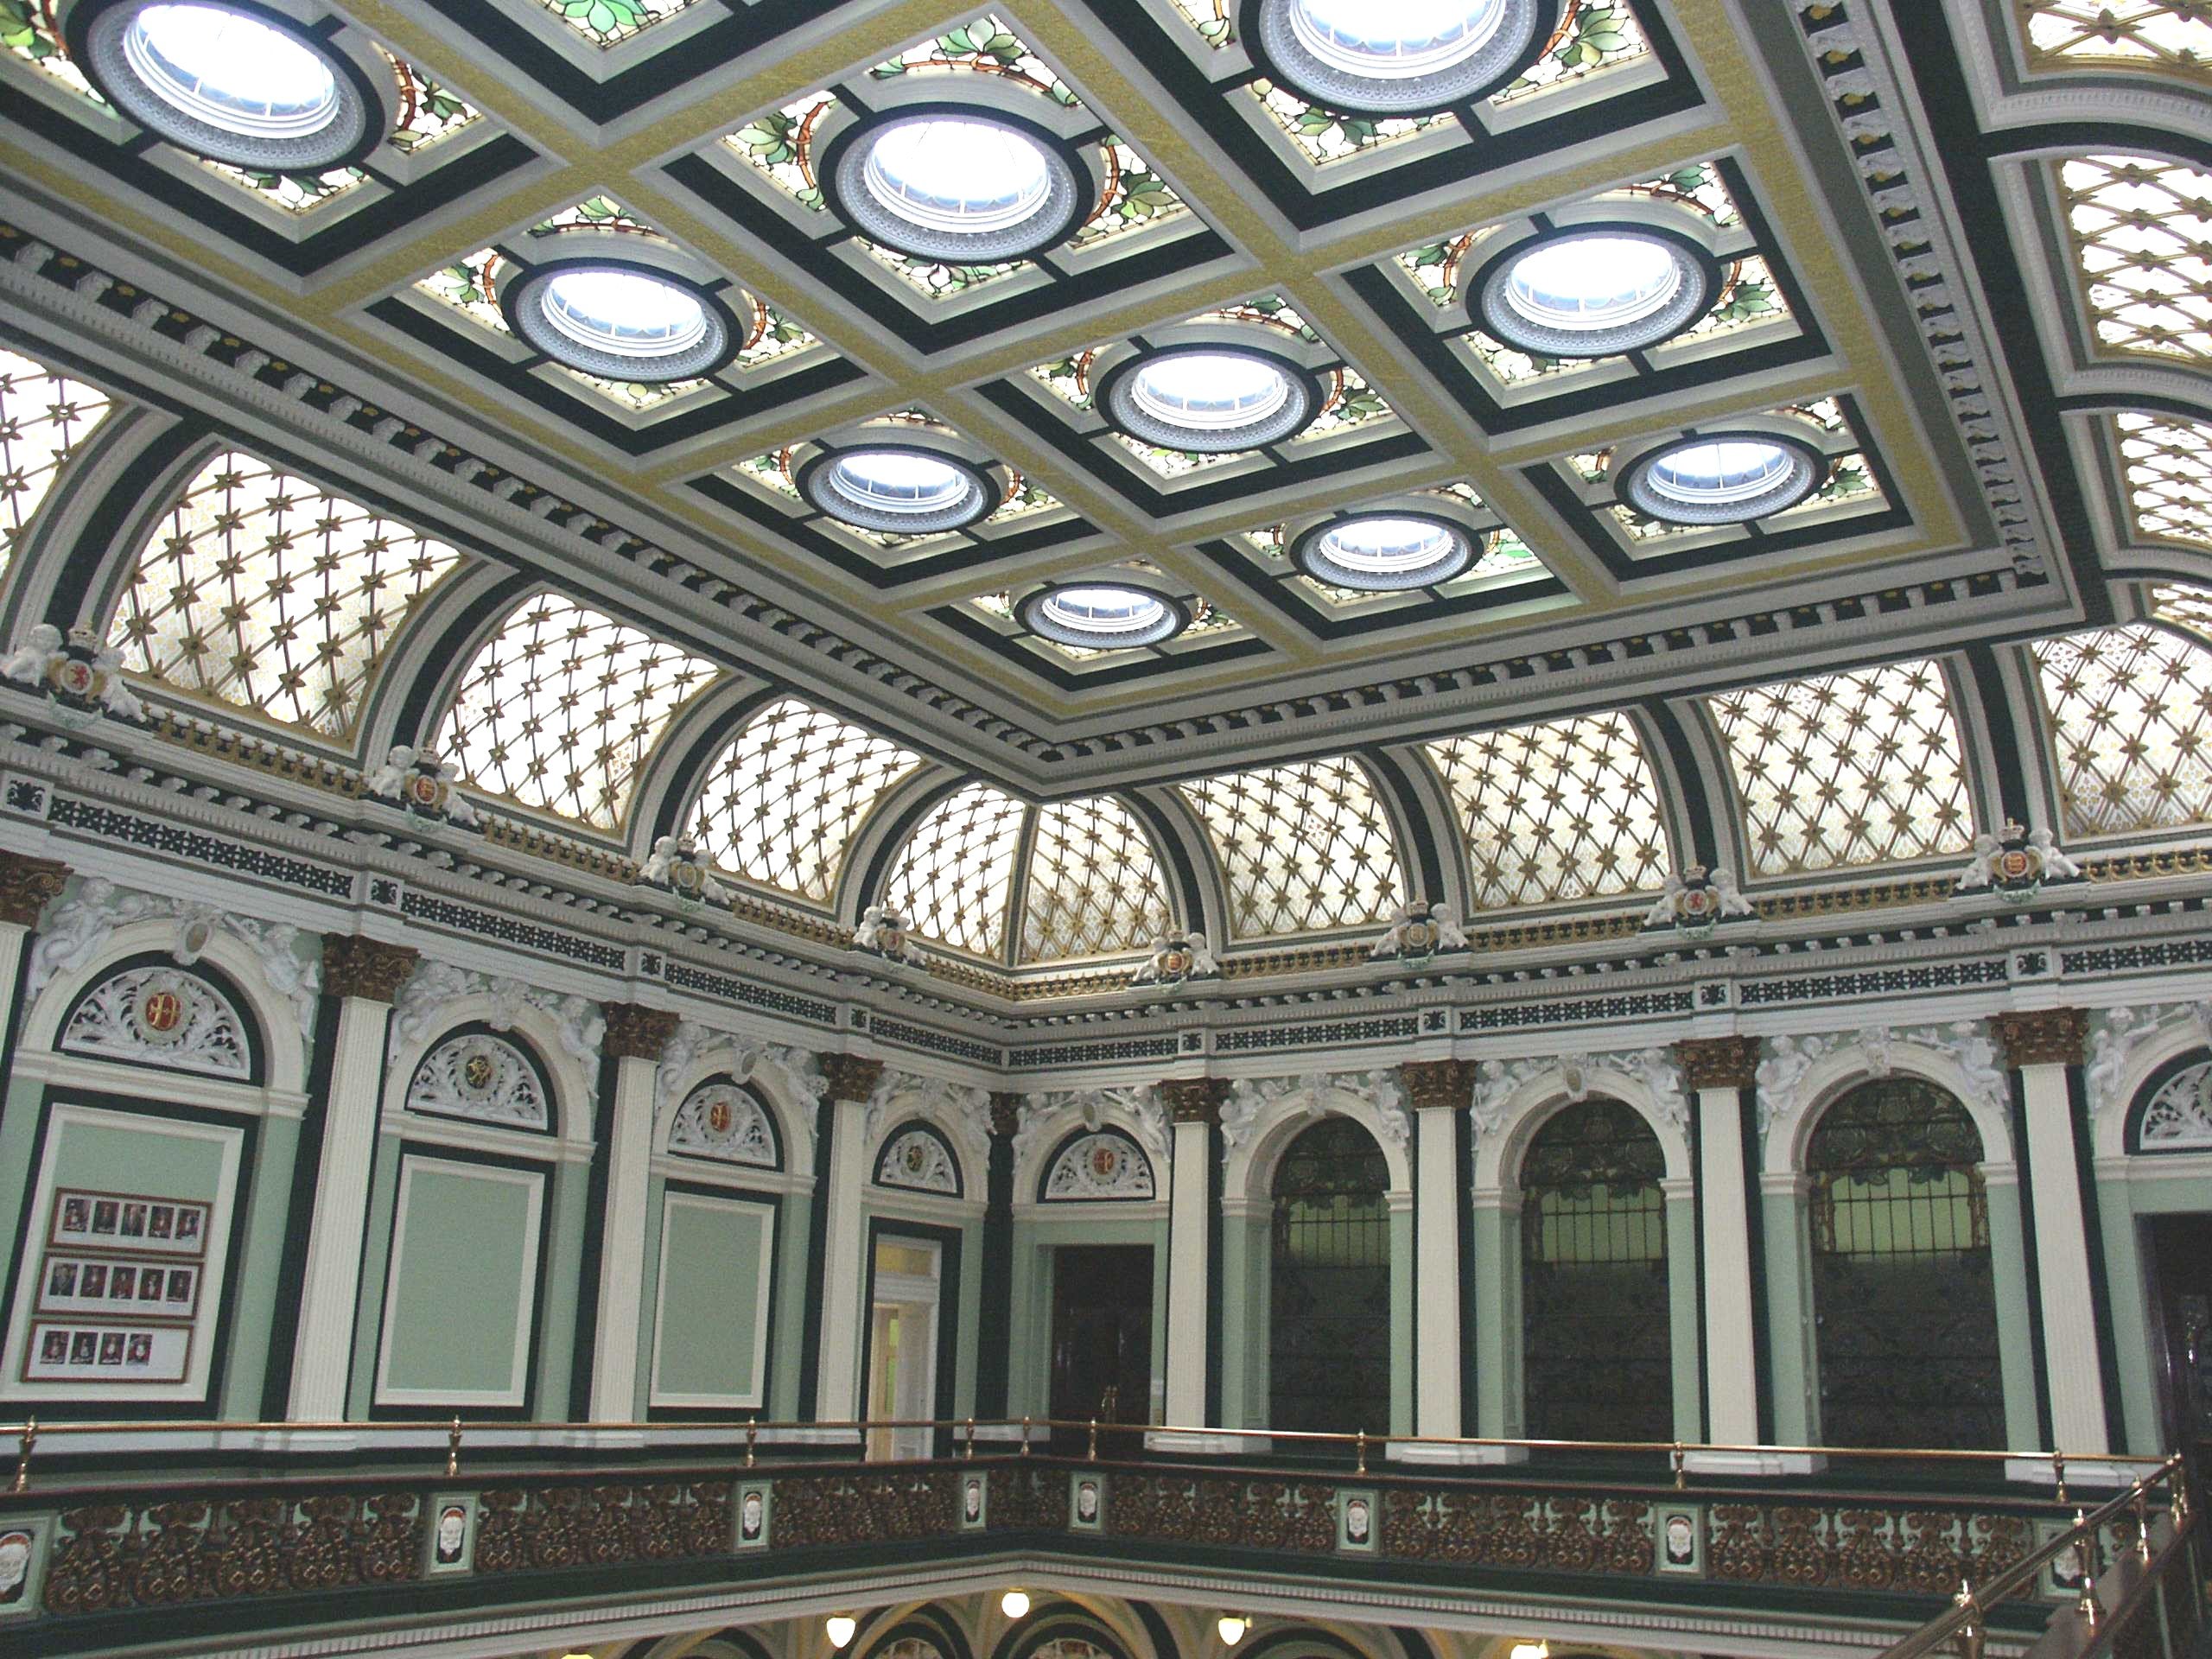 Halifax Town Hall inside